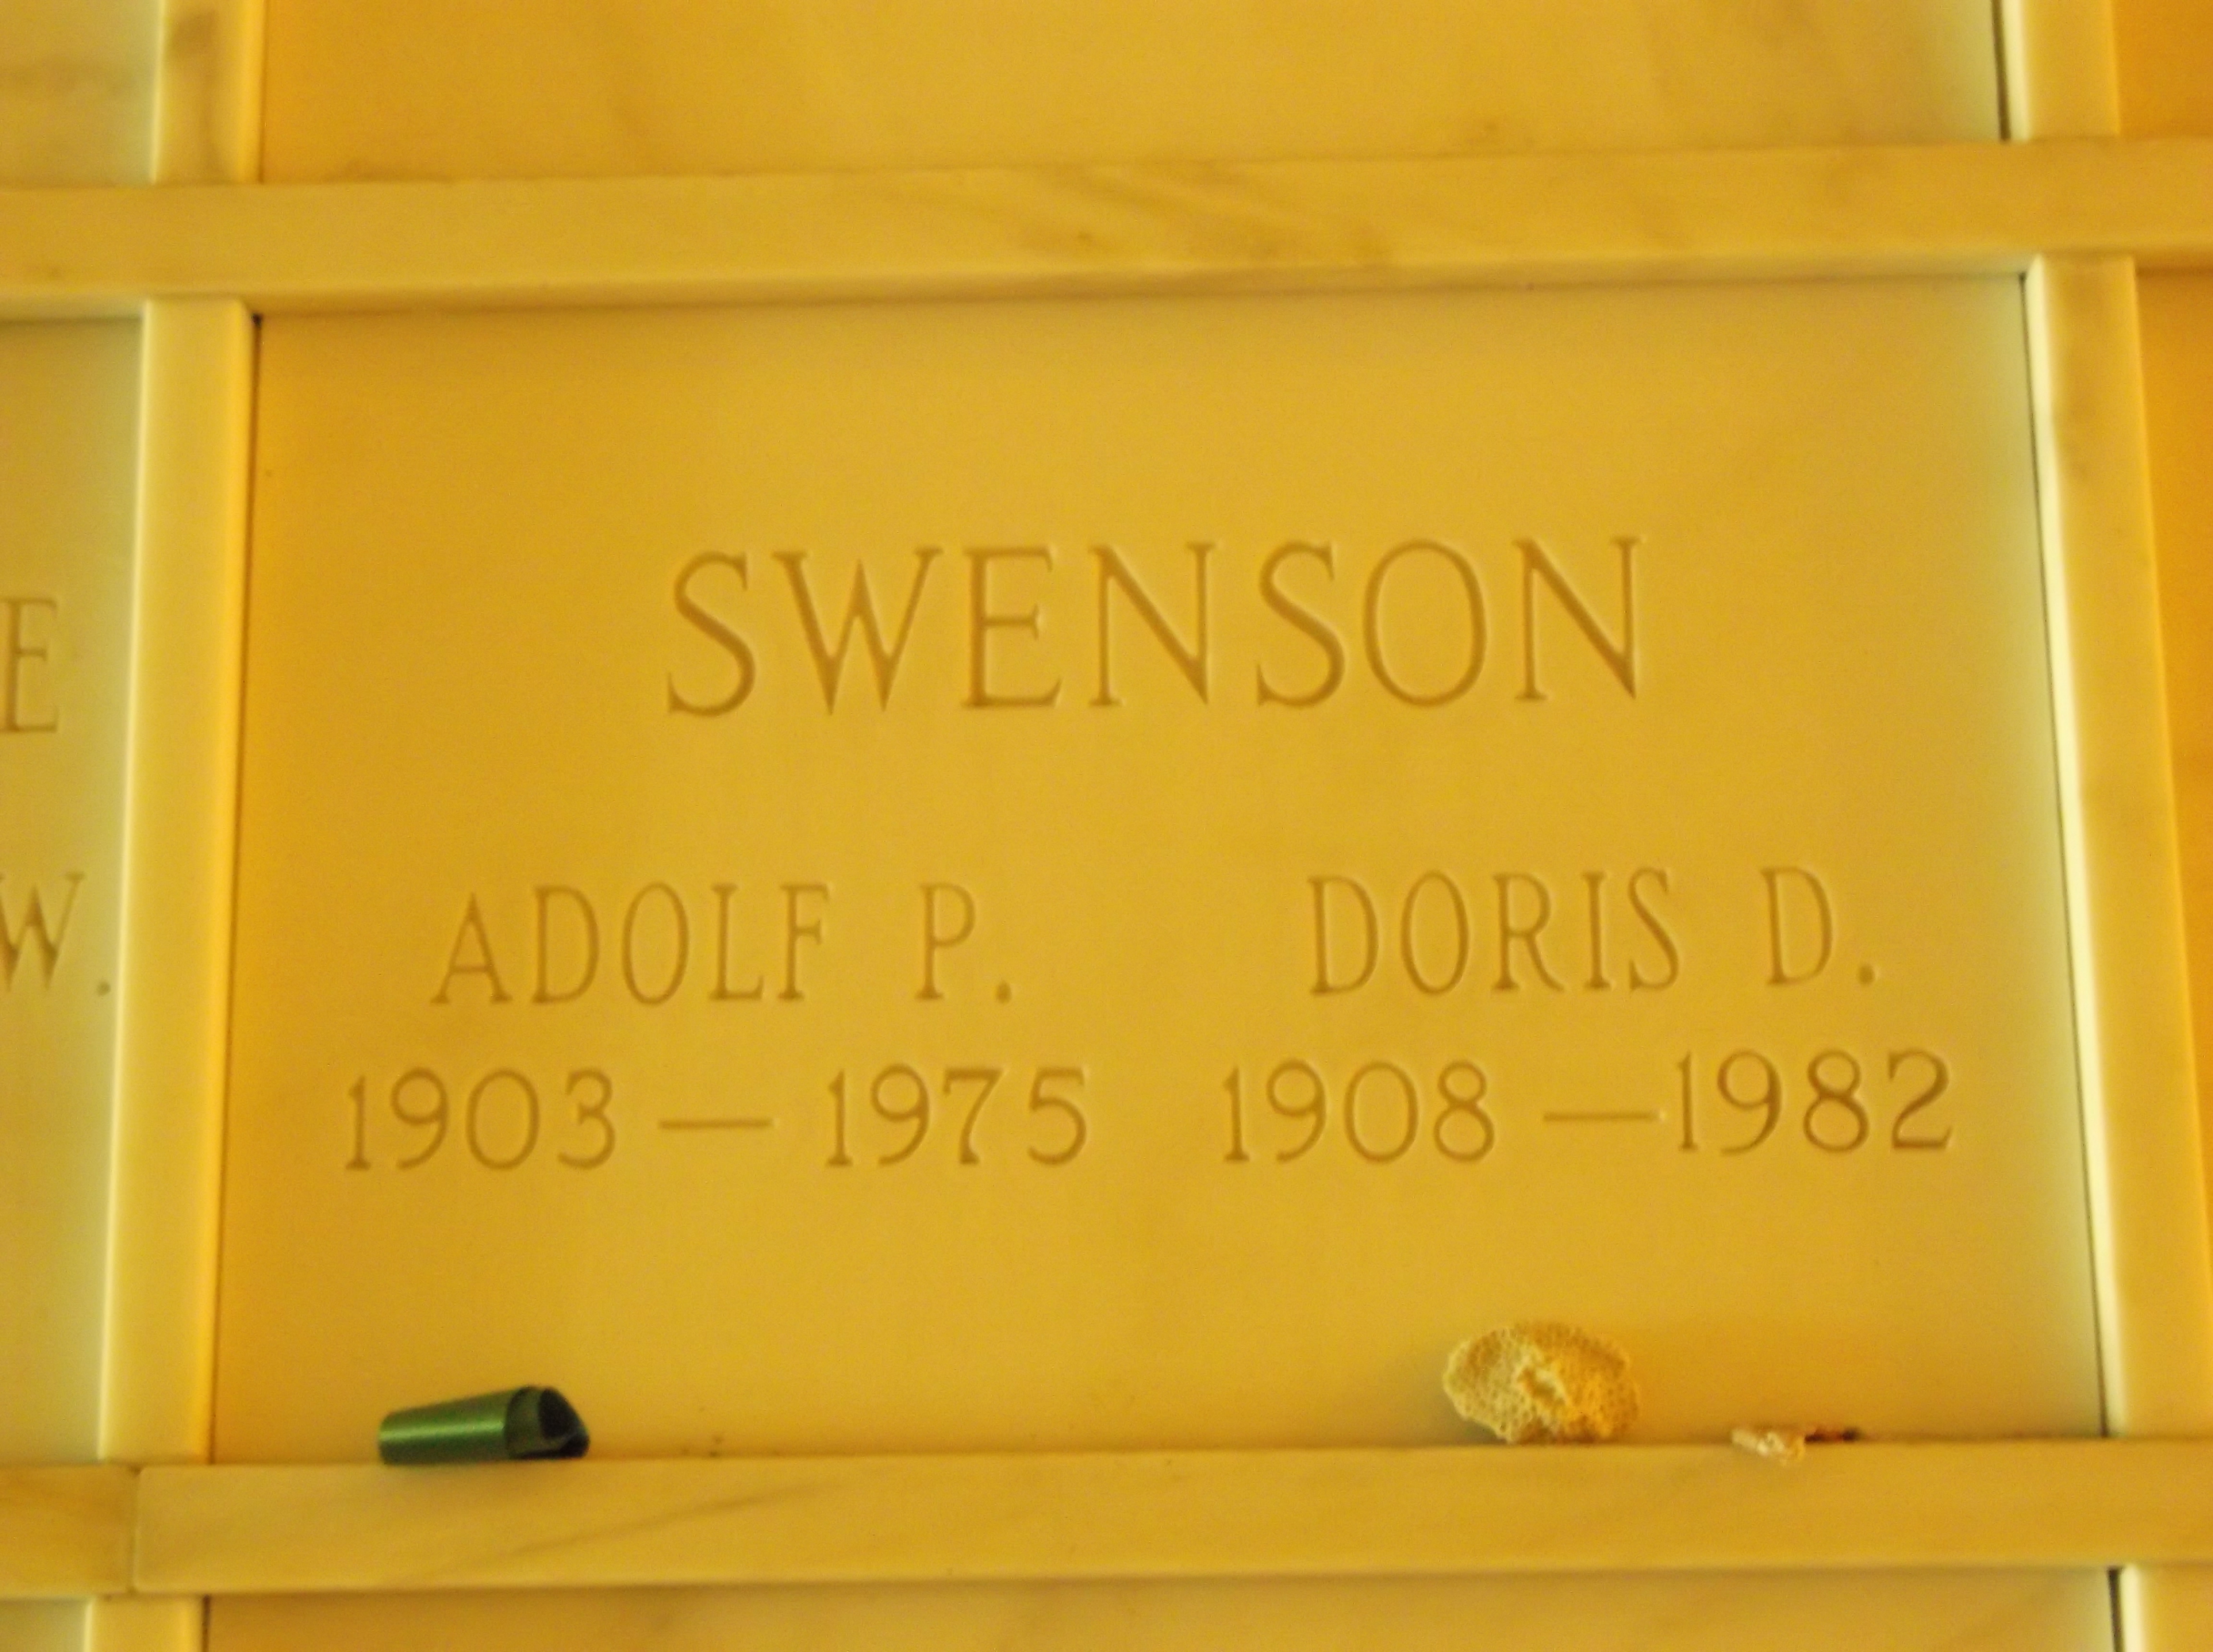 Doris D Swenson